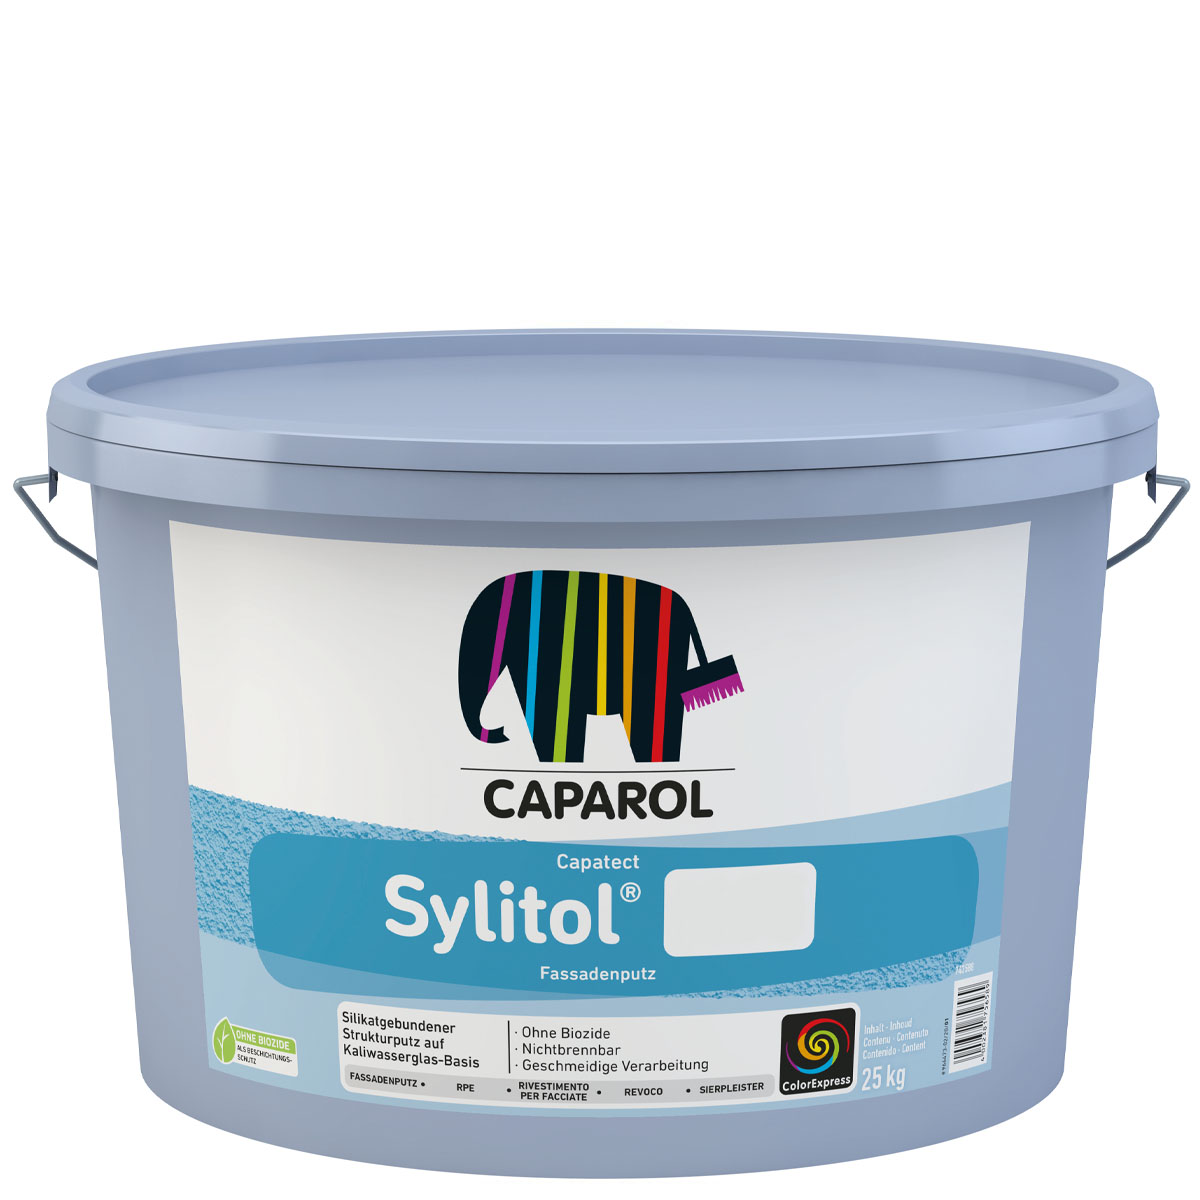 Caparol Capatect Sylitol Fassadenputz K15 (1,5mm) 25kg, weiss